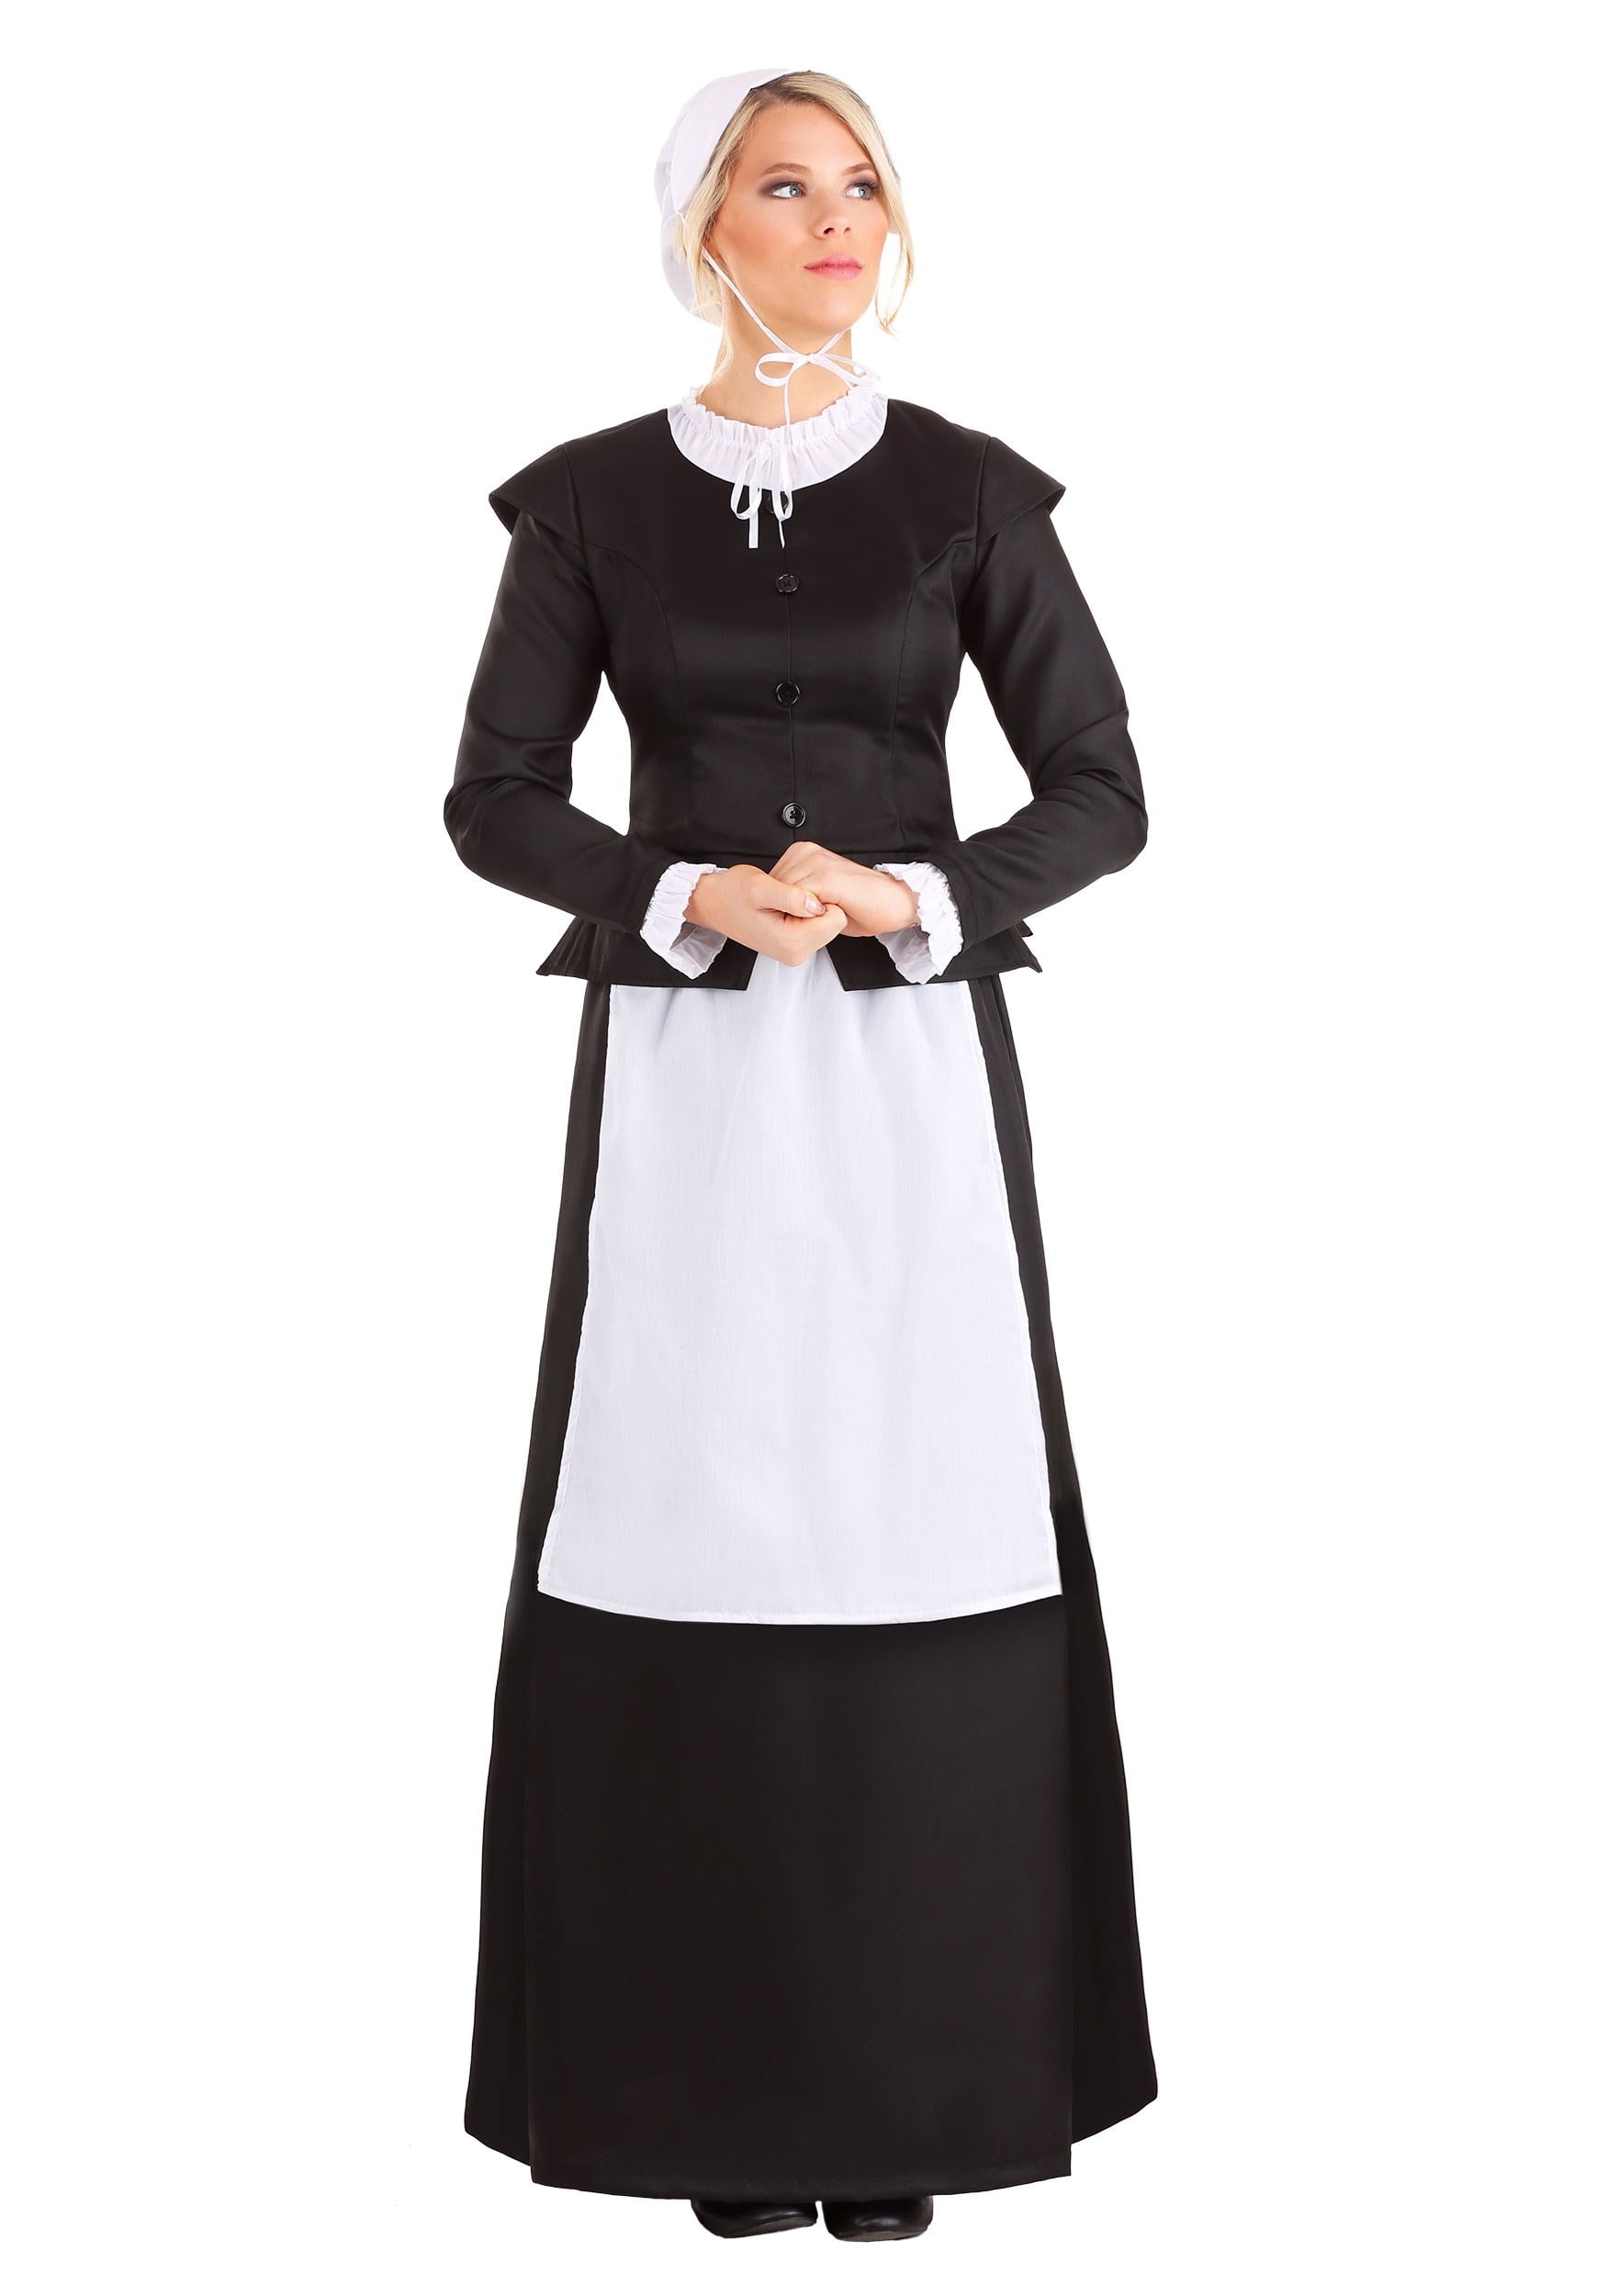 Women's Thankful Pilgrim Costume - Walmart.com